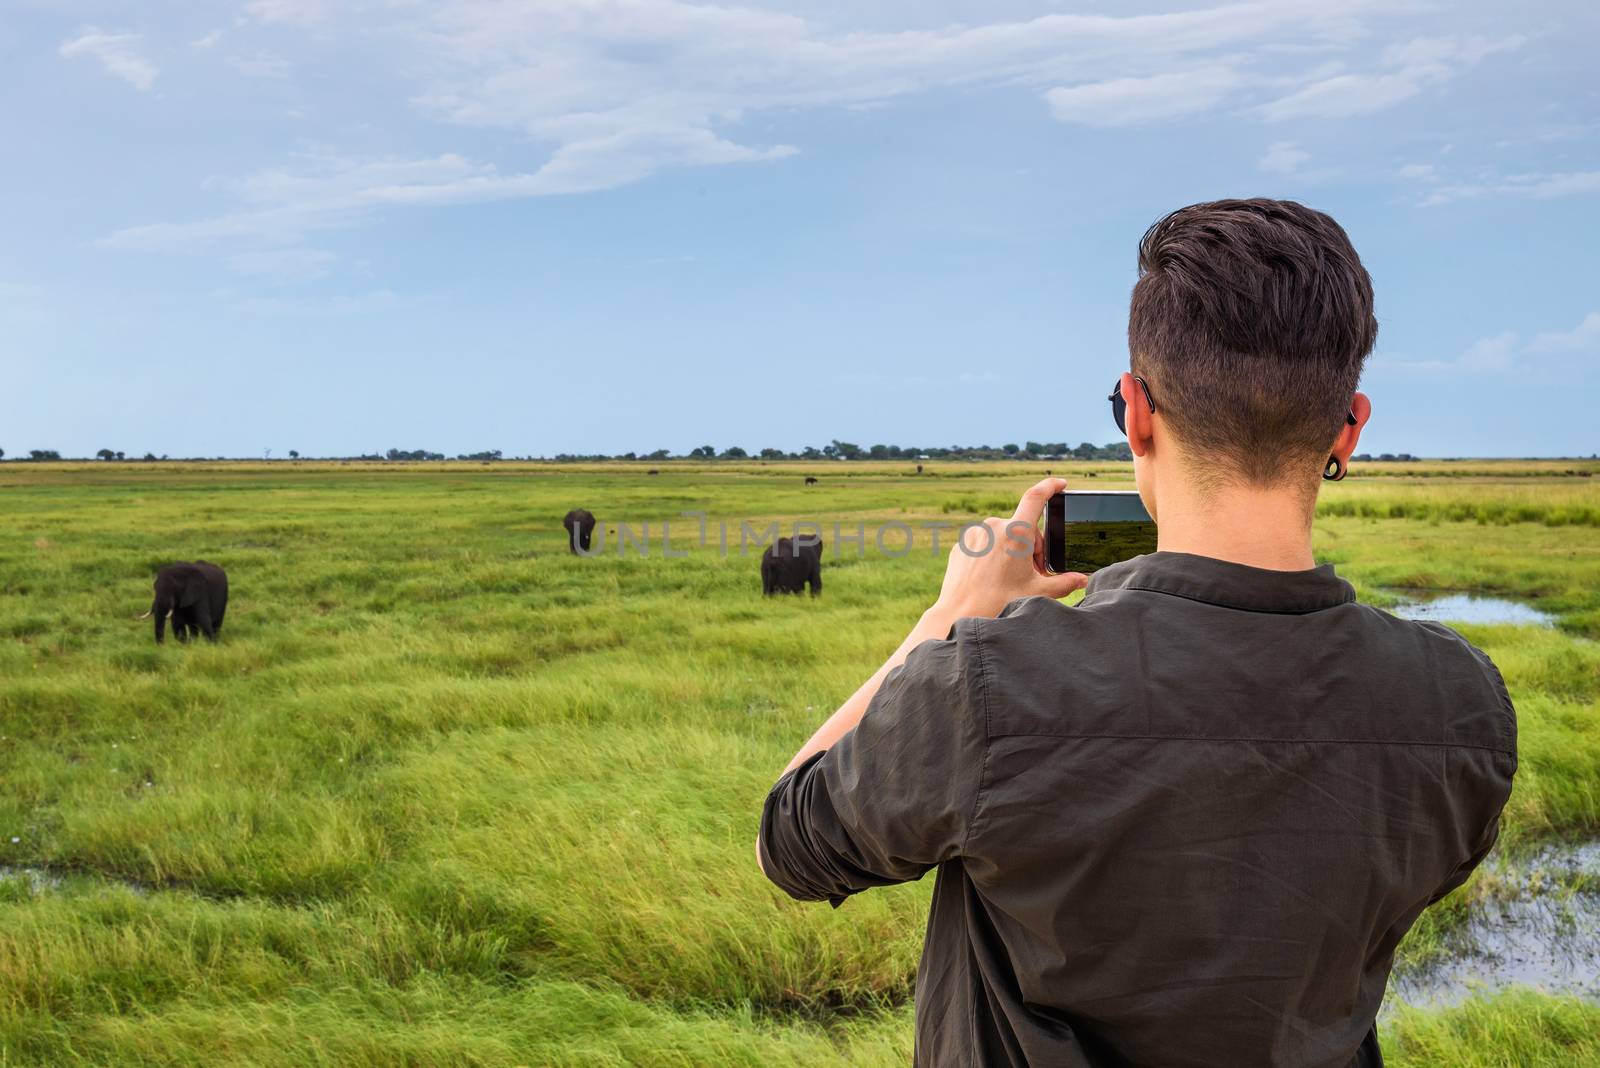 Tourist films elephants with a smartphone in Chobe National Park, Botswana by nickfox